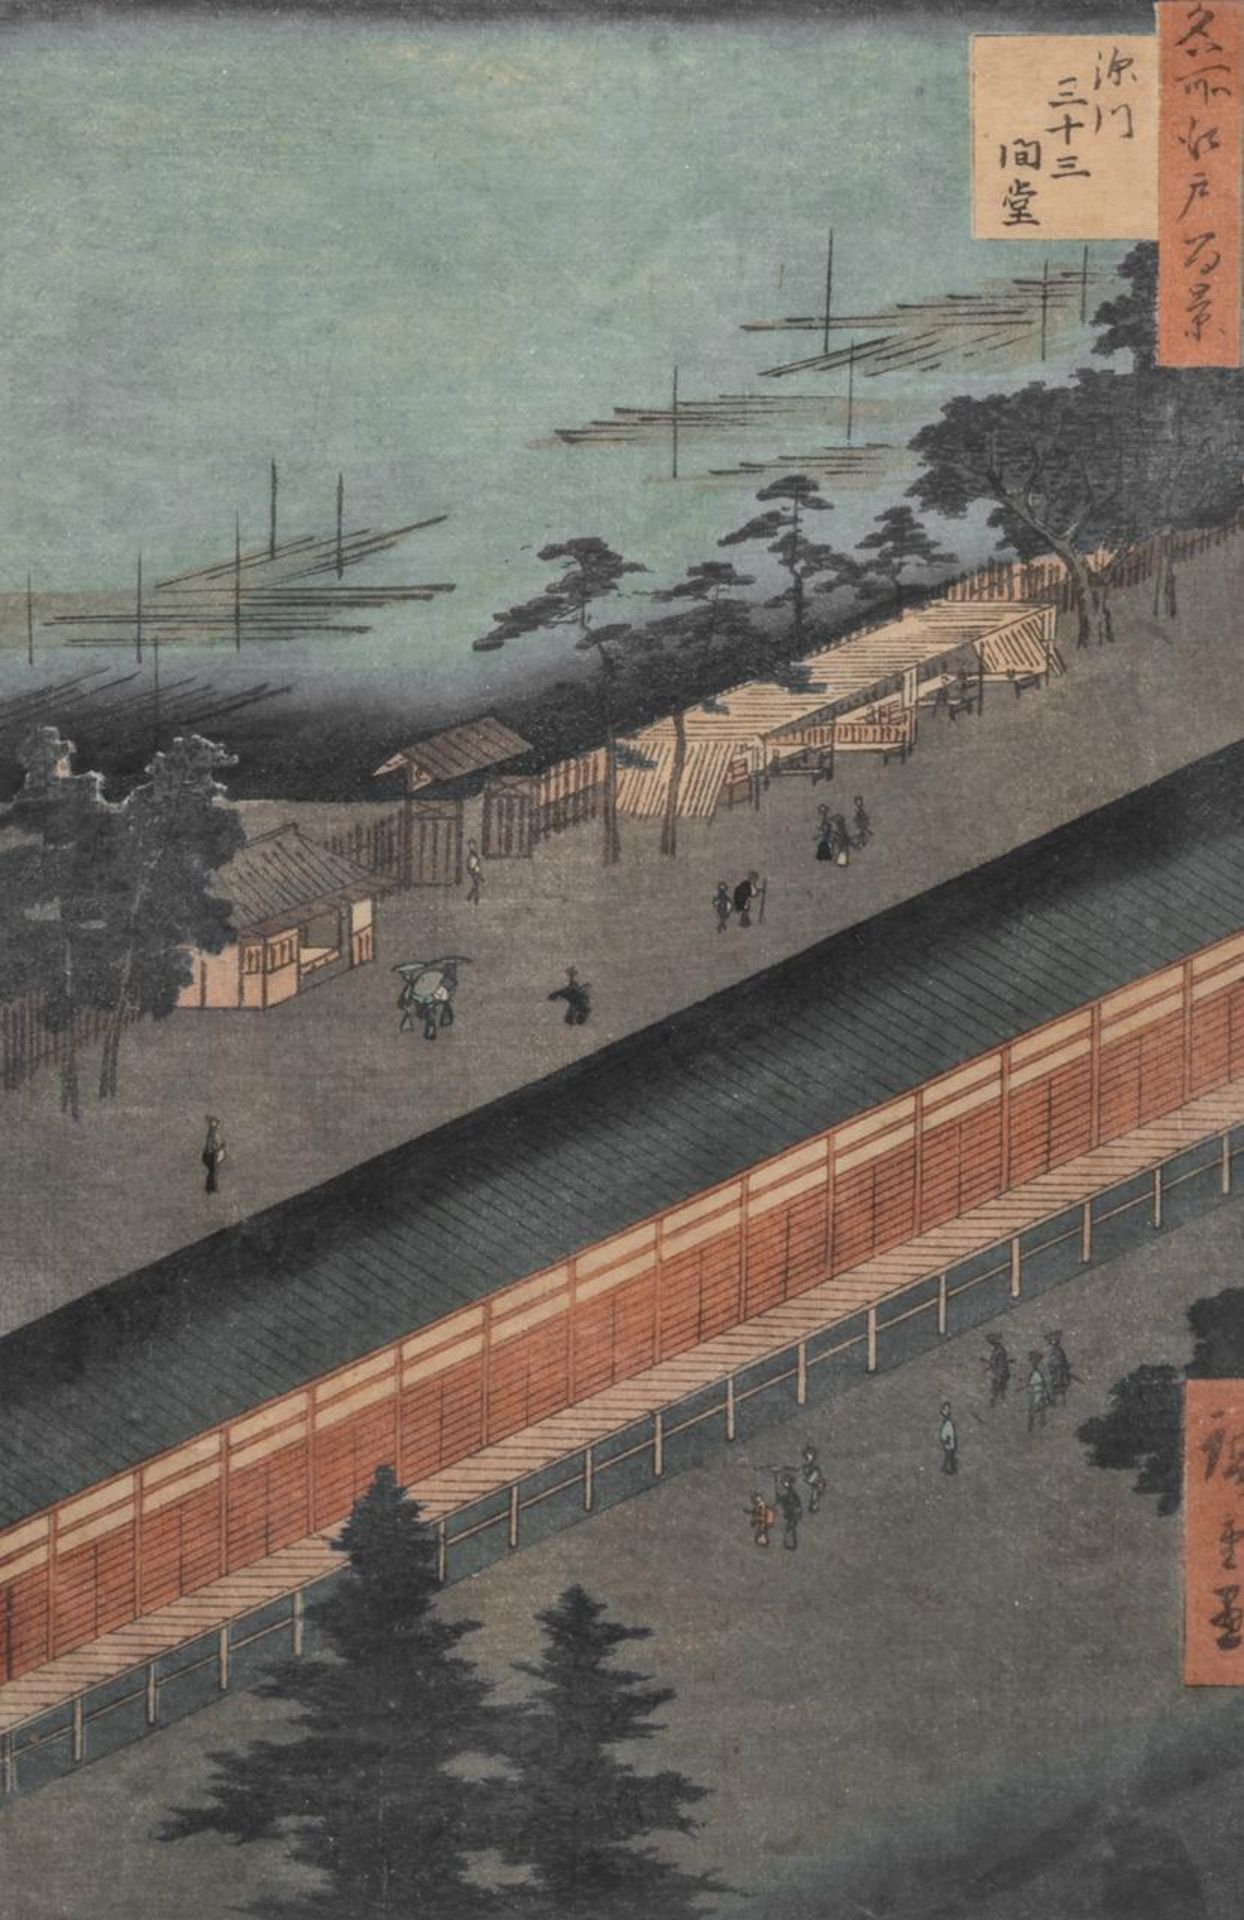 Hiroshige Utagawa, "The Hall of Thirty-Three Bays at Fukagawa", from the series "One Hundred Famous